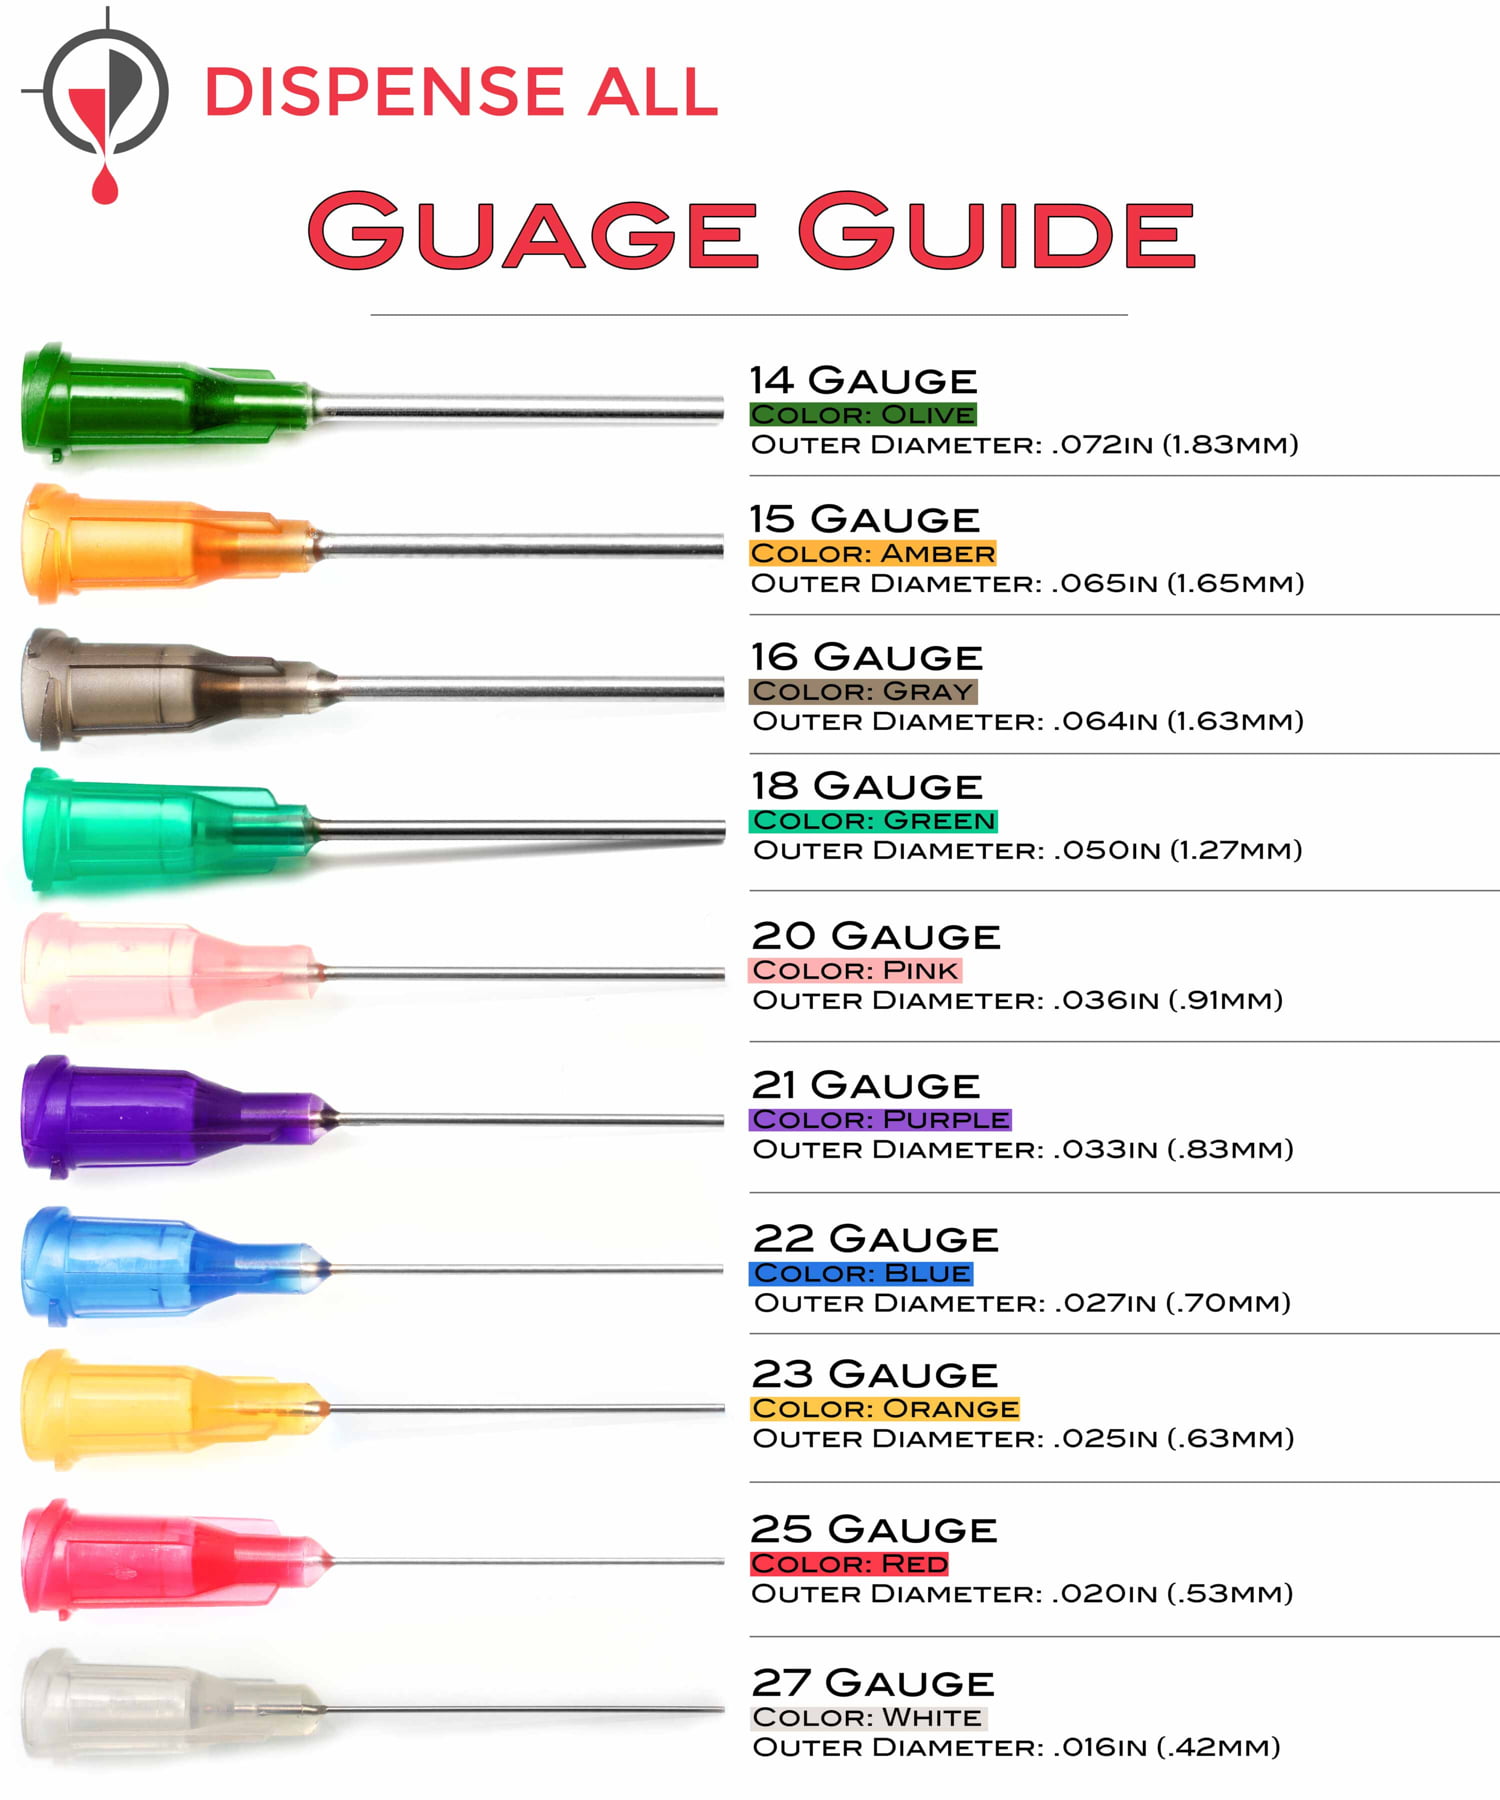 18Gauge Dispensing Needle 1 - Luer Lock Syringe Needle, Pack of 100:  : Industrial & Scientific